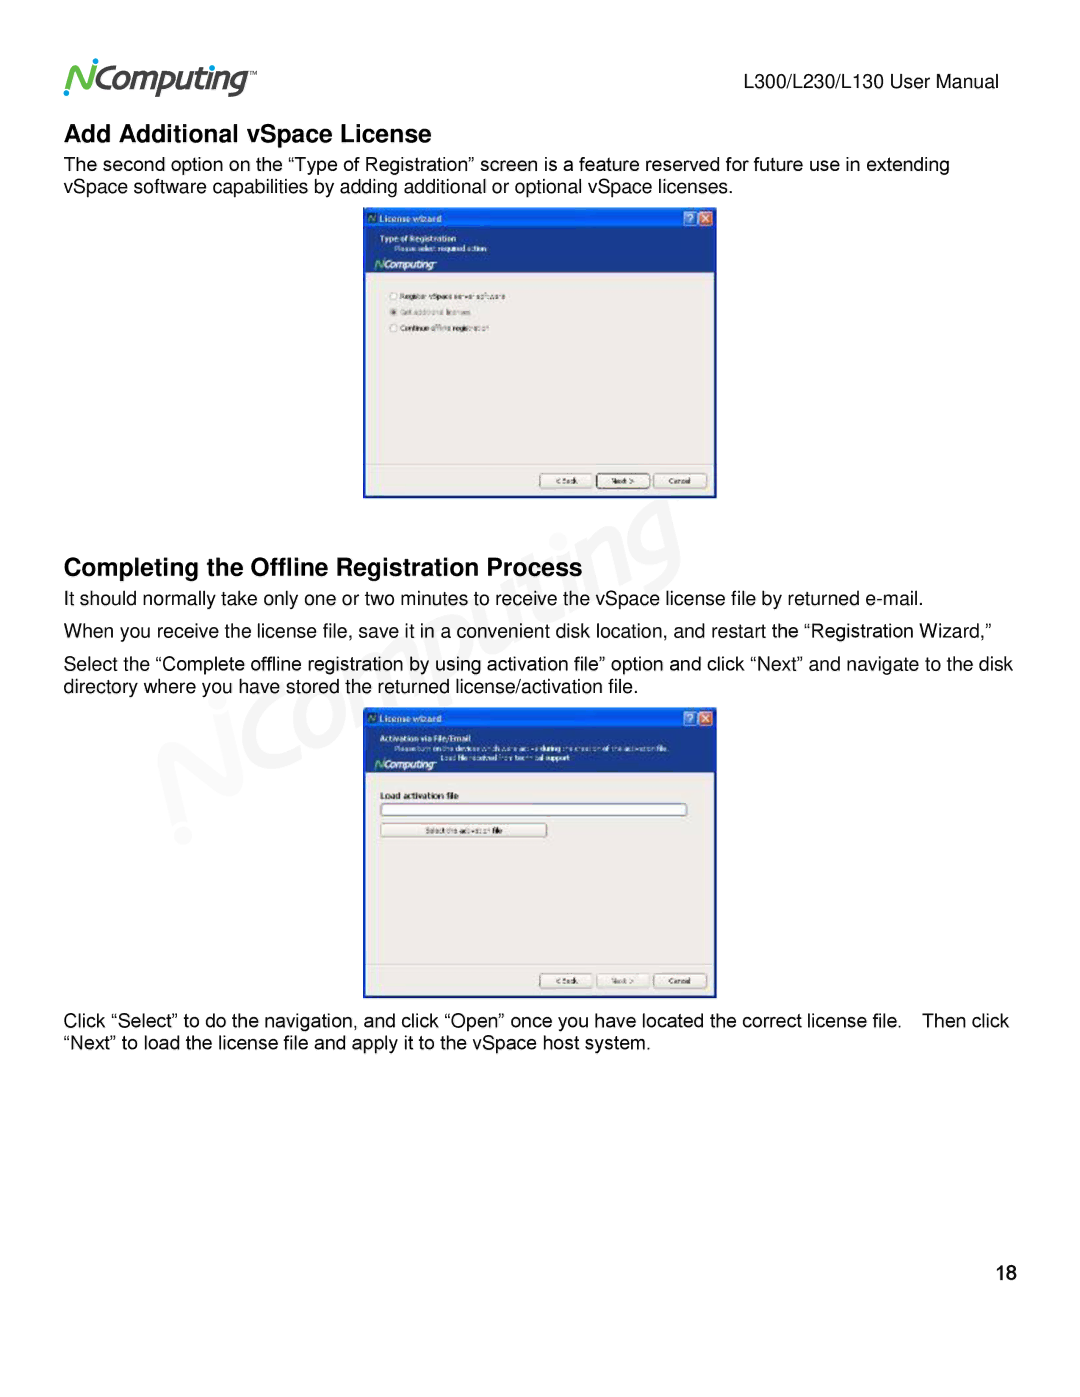 NComputing L230, L130, L300 user manual Add Additional vSpace License, Completing the Offline Registration Process 